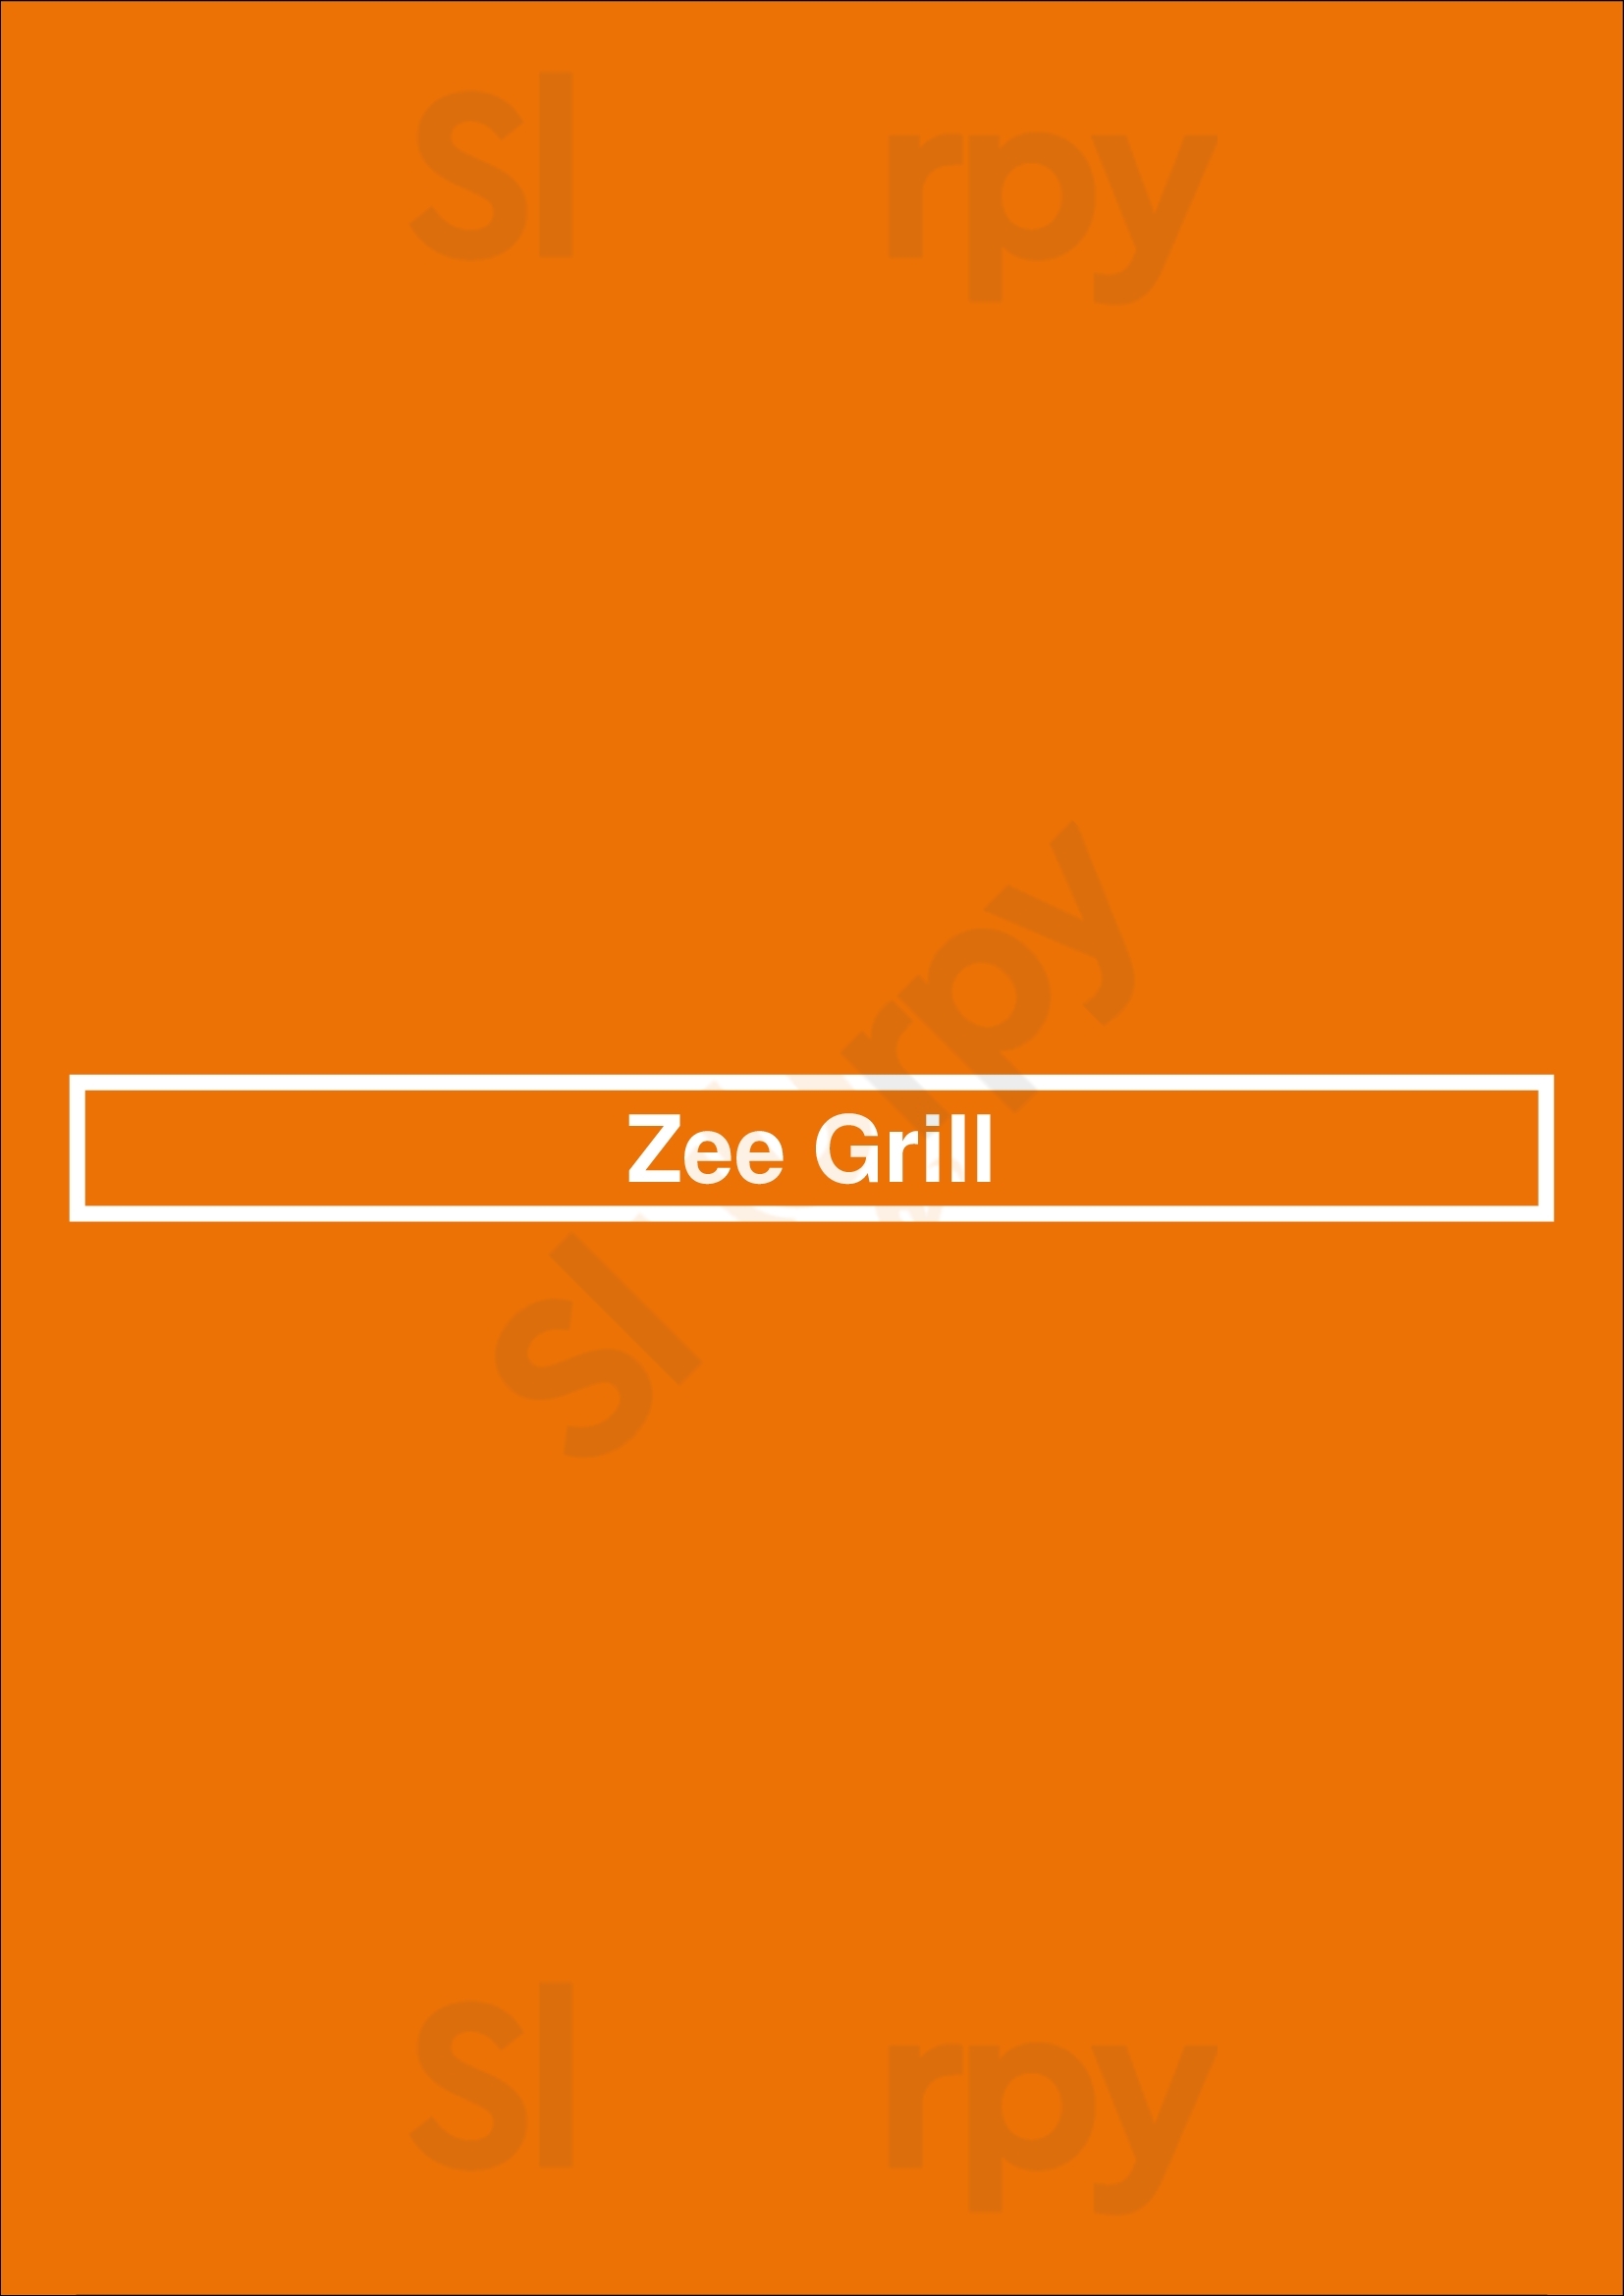 Zee Grill Toronto Menu - 1